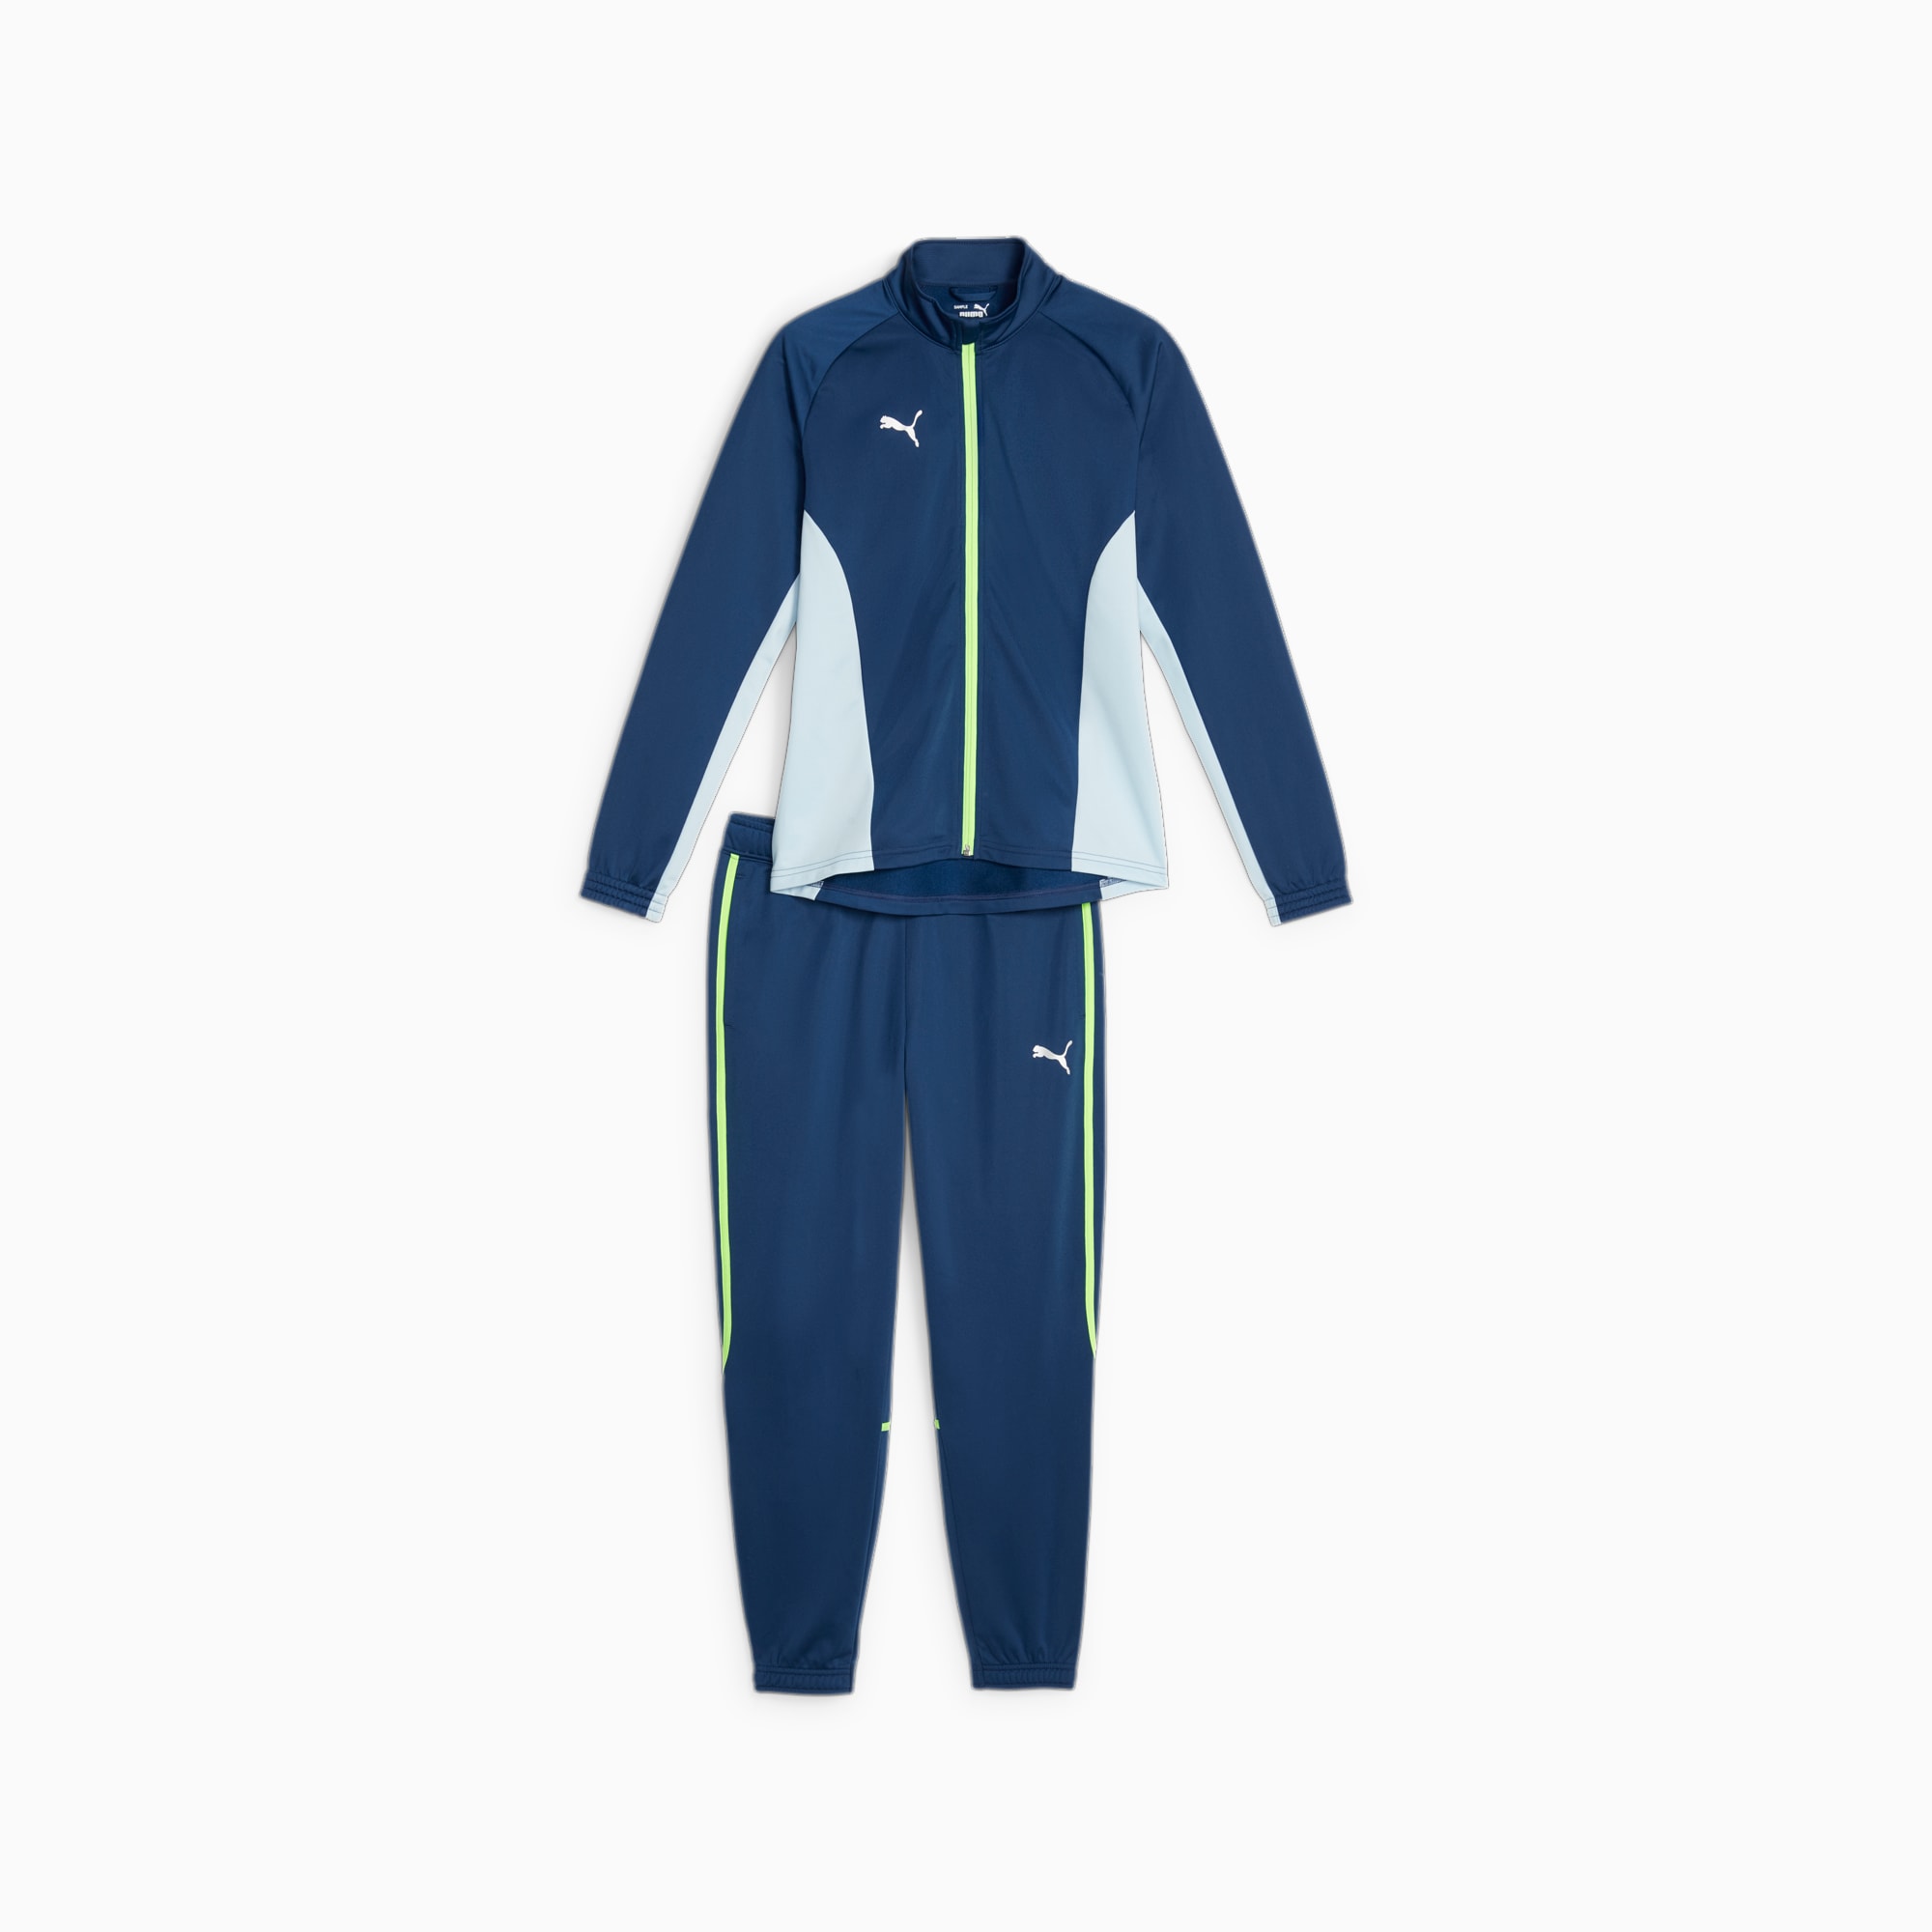 PUMA IndividualBLAZE Fußball Trainingsanzug, Blau/Silber, Größe: L, Kleidung